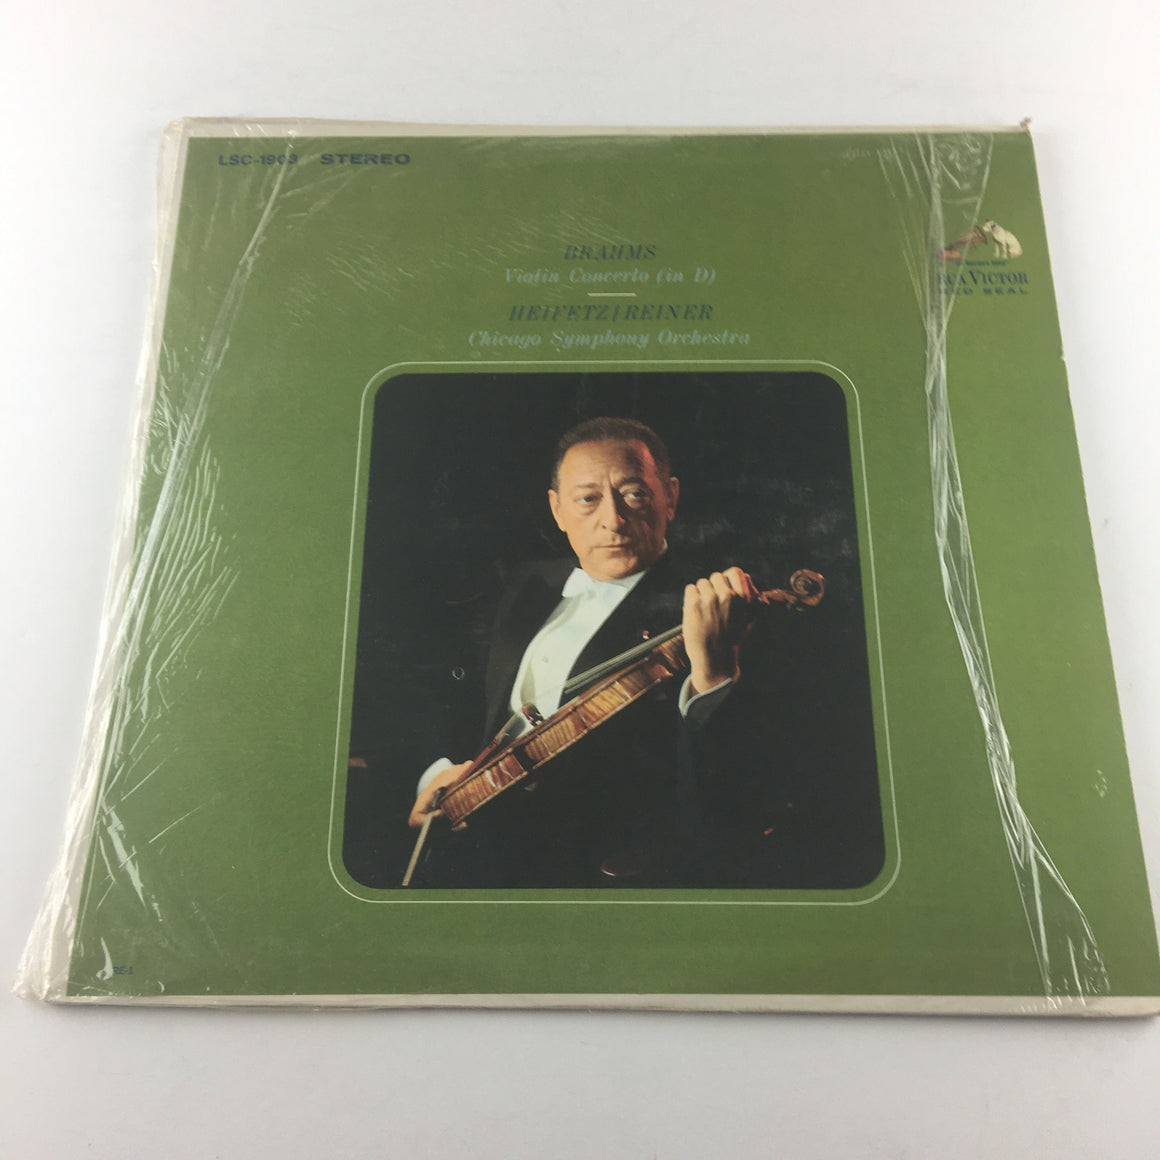 Heifetz Reiner Brahms - Violin Concerto (In D) Used Vinyl LP VG+\VG+